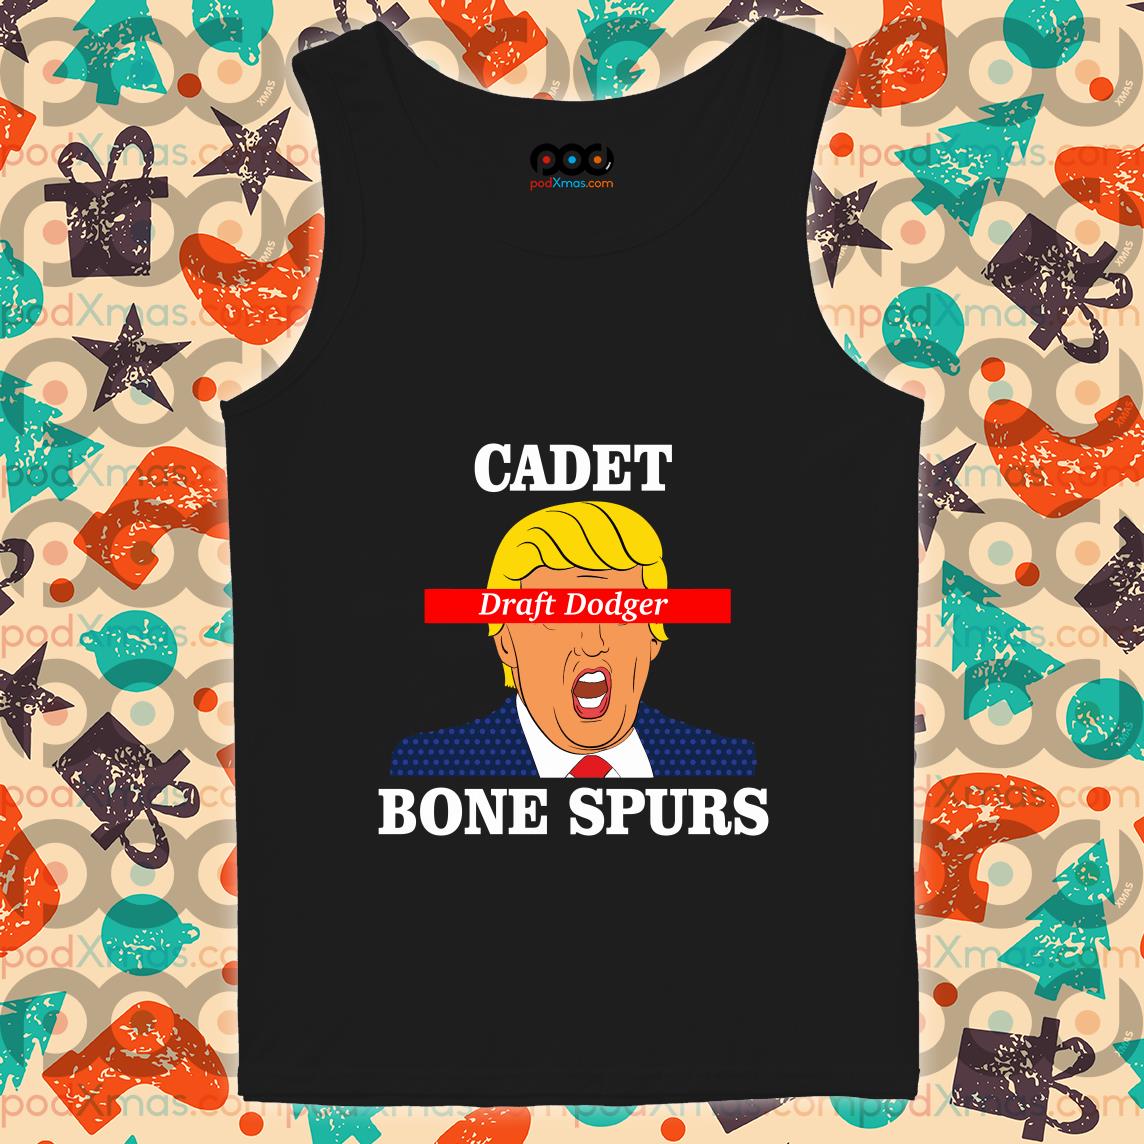 Get Trump Draft Dodger Cadet Bone Spurs Shirt For Free Shipping